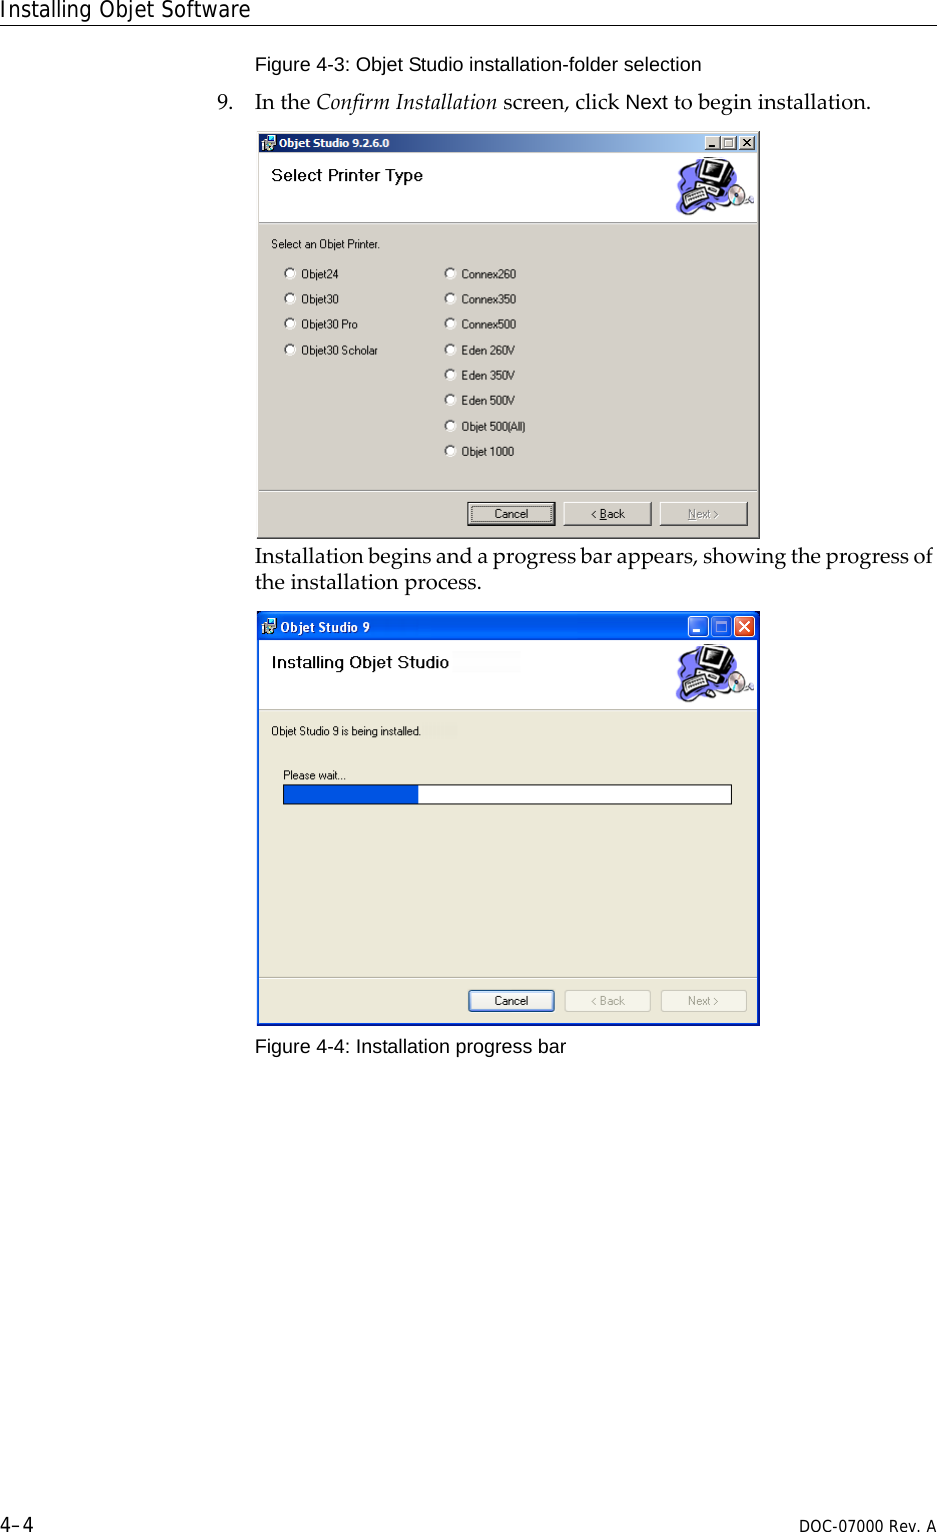 Installing Objet Software4–4 DOC-07000 Rev. AFigure 4-3: Objet Studio installation-folder selection9. IntheConfirmInstallationscreen,clickNext tobegininstallation.Installationbeginsandaprogressbarappears,showingtheprogressoftheinstallationprocess.Figure 4-4: Installation progress bar